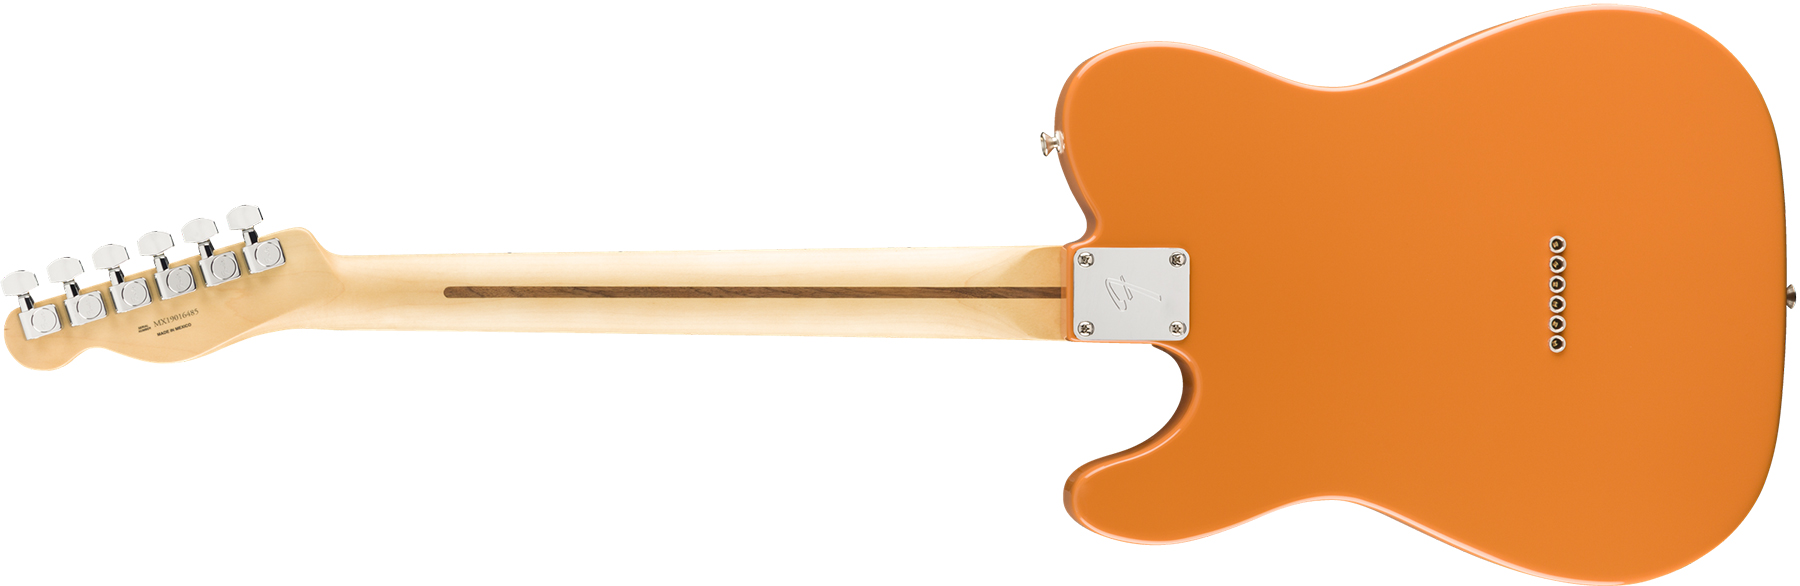 Fender Tele Player Mex Mn - Capri Orange - Televorm elektrische gitaar - Variation 1